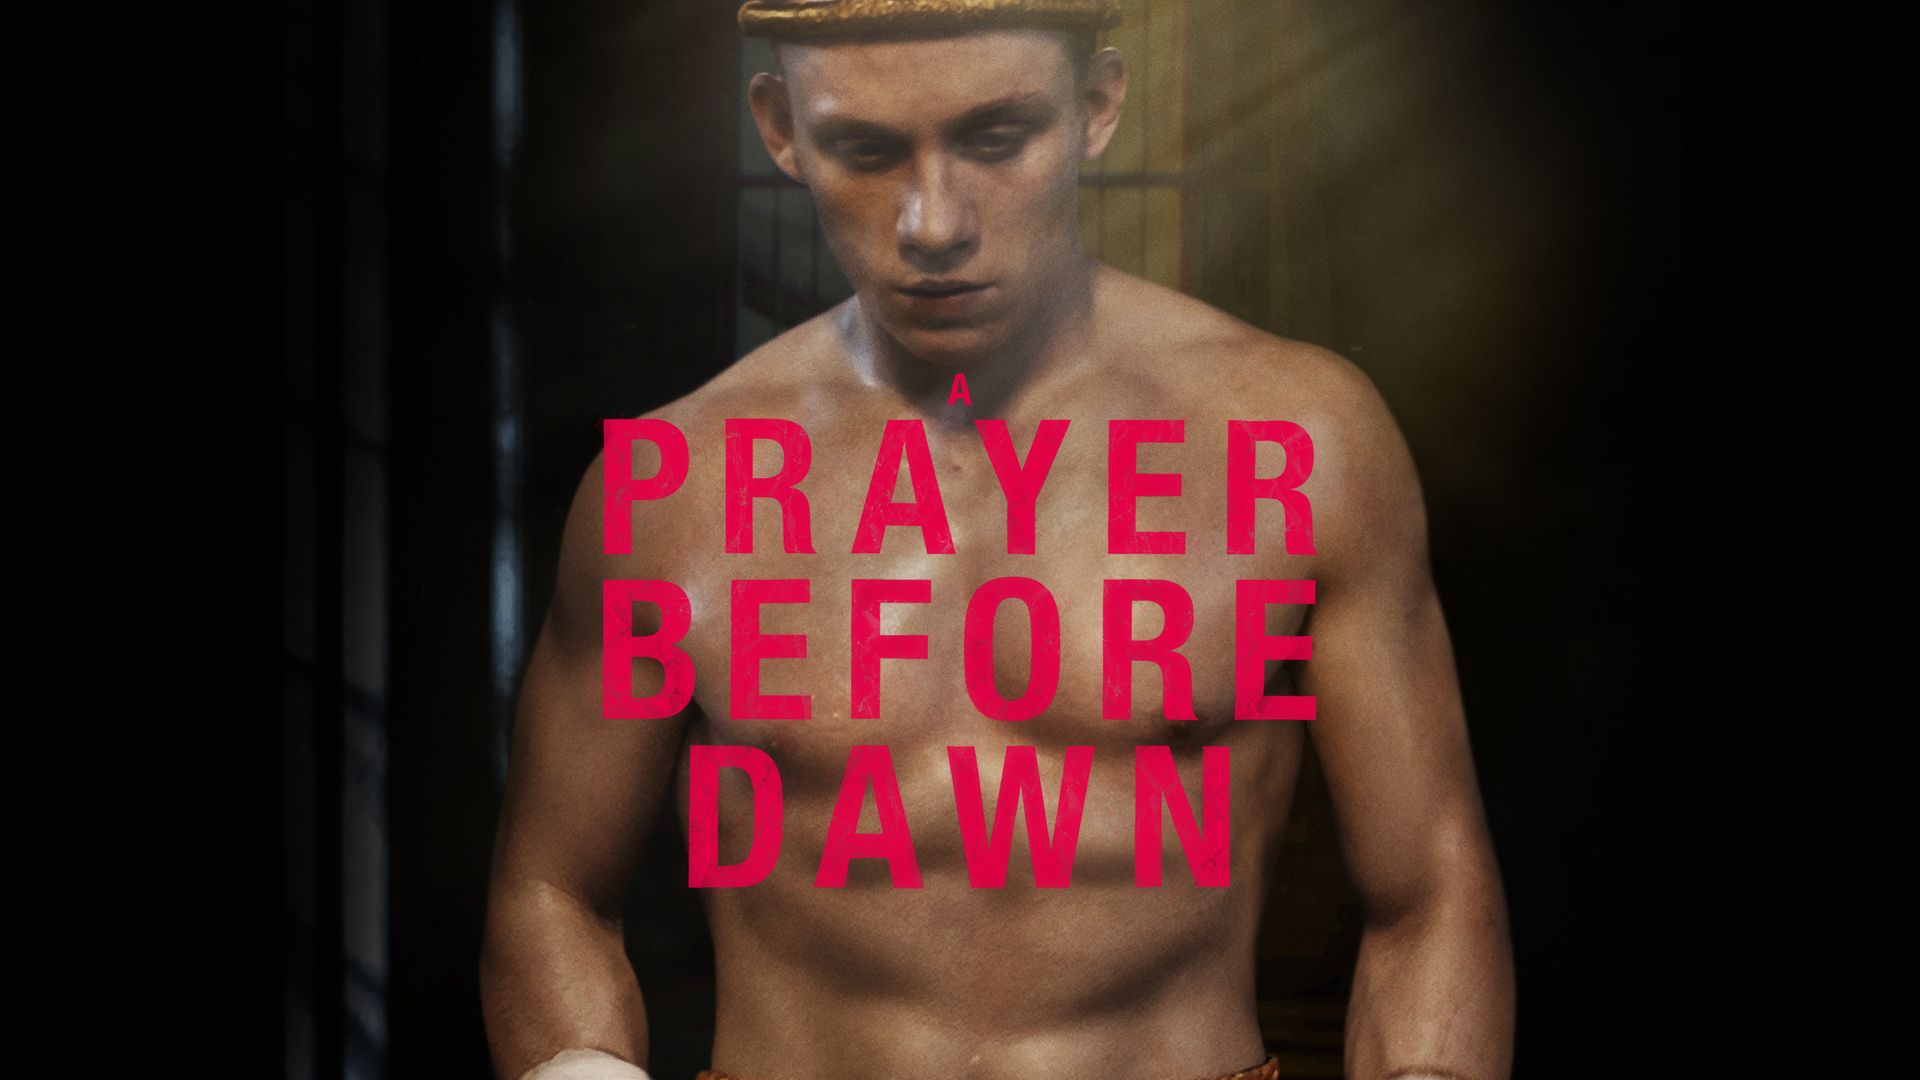 Watch A Prayer Before Dawn